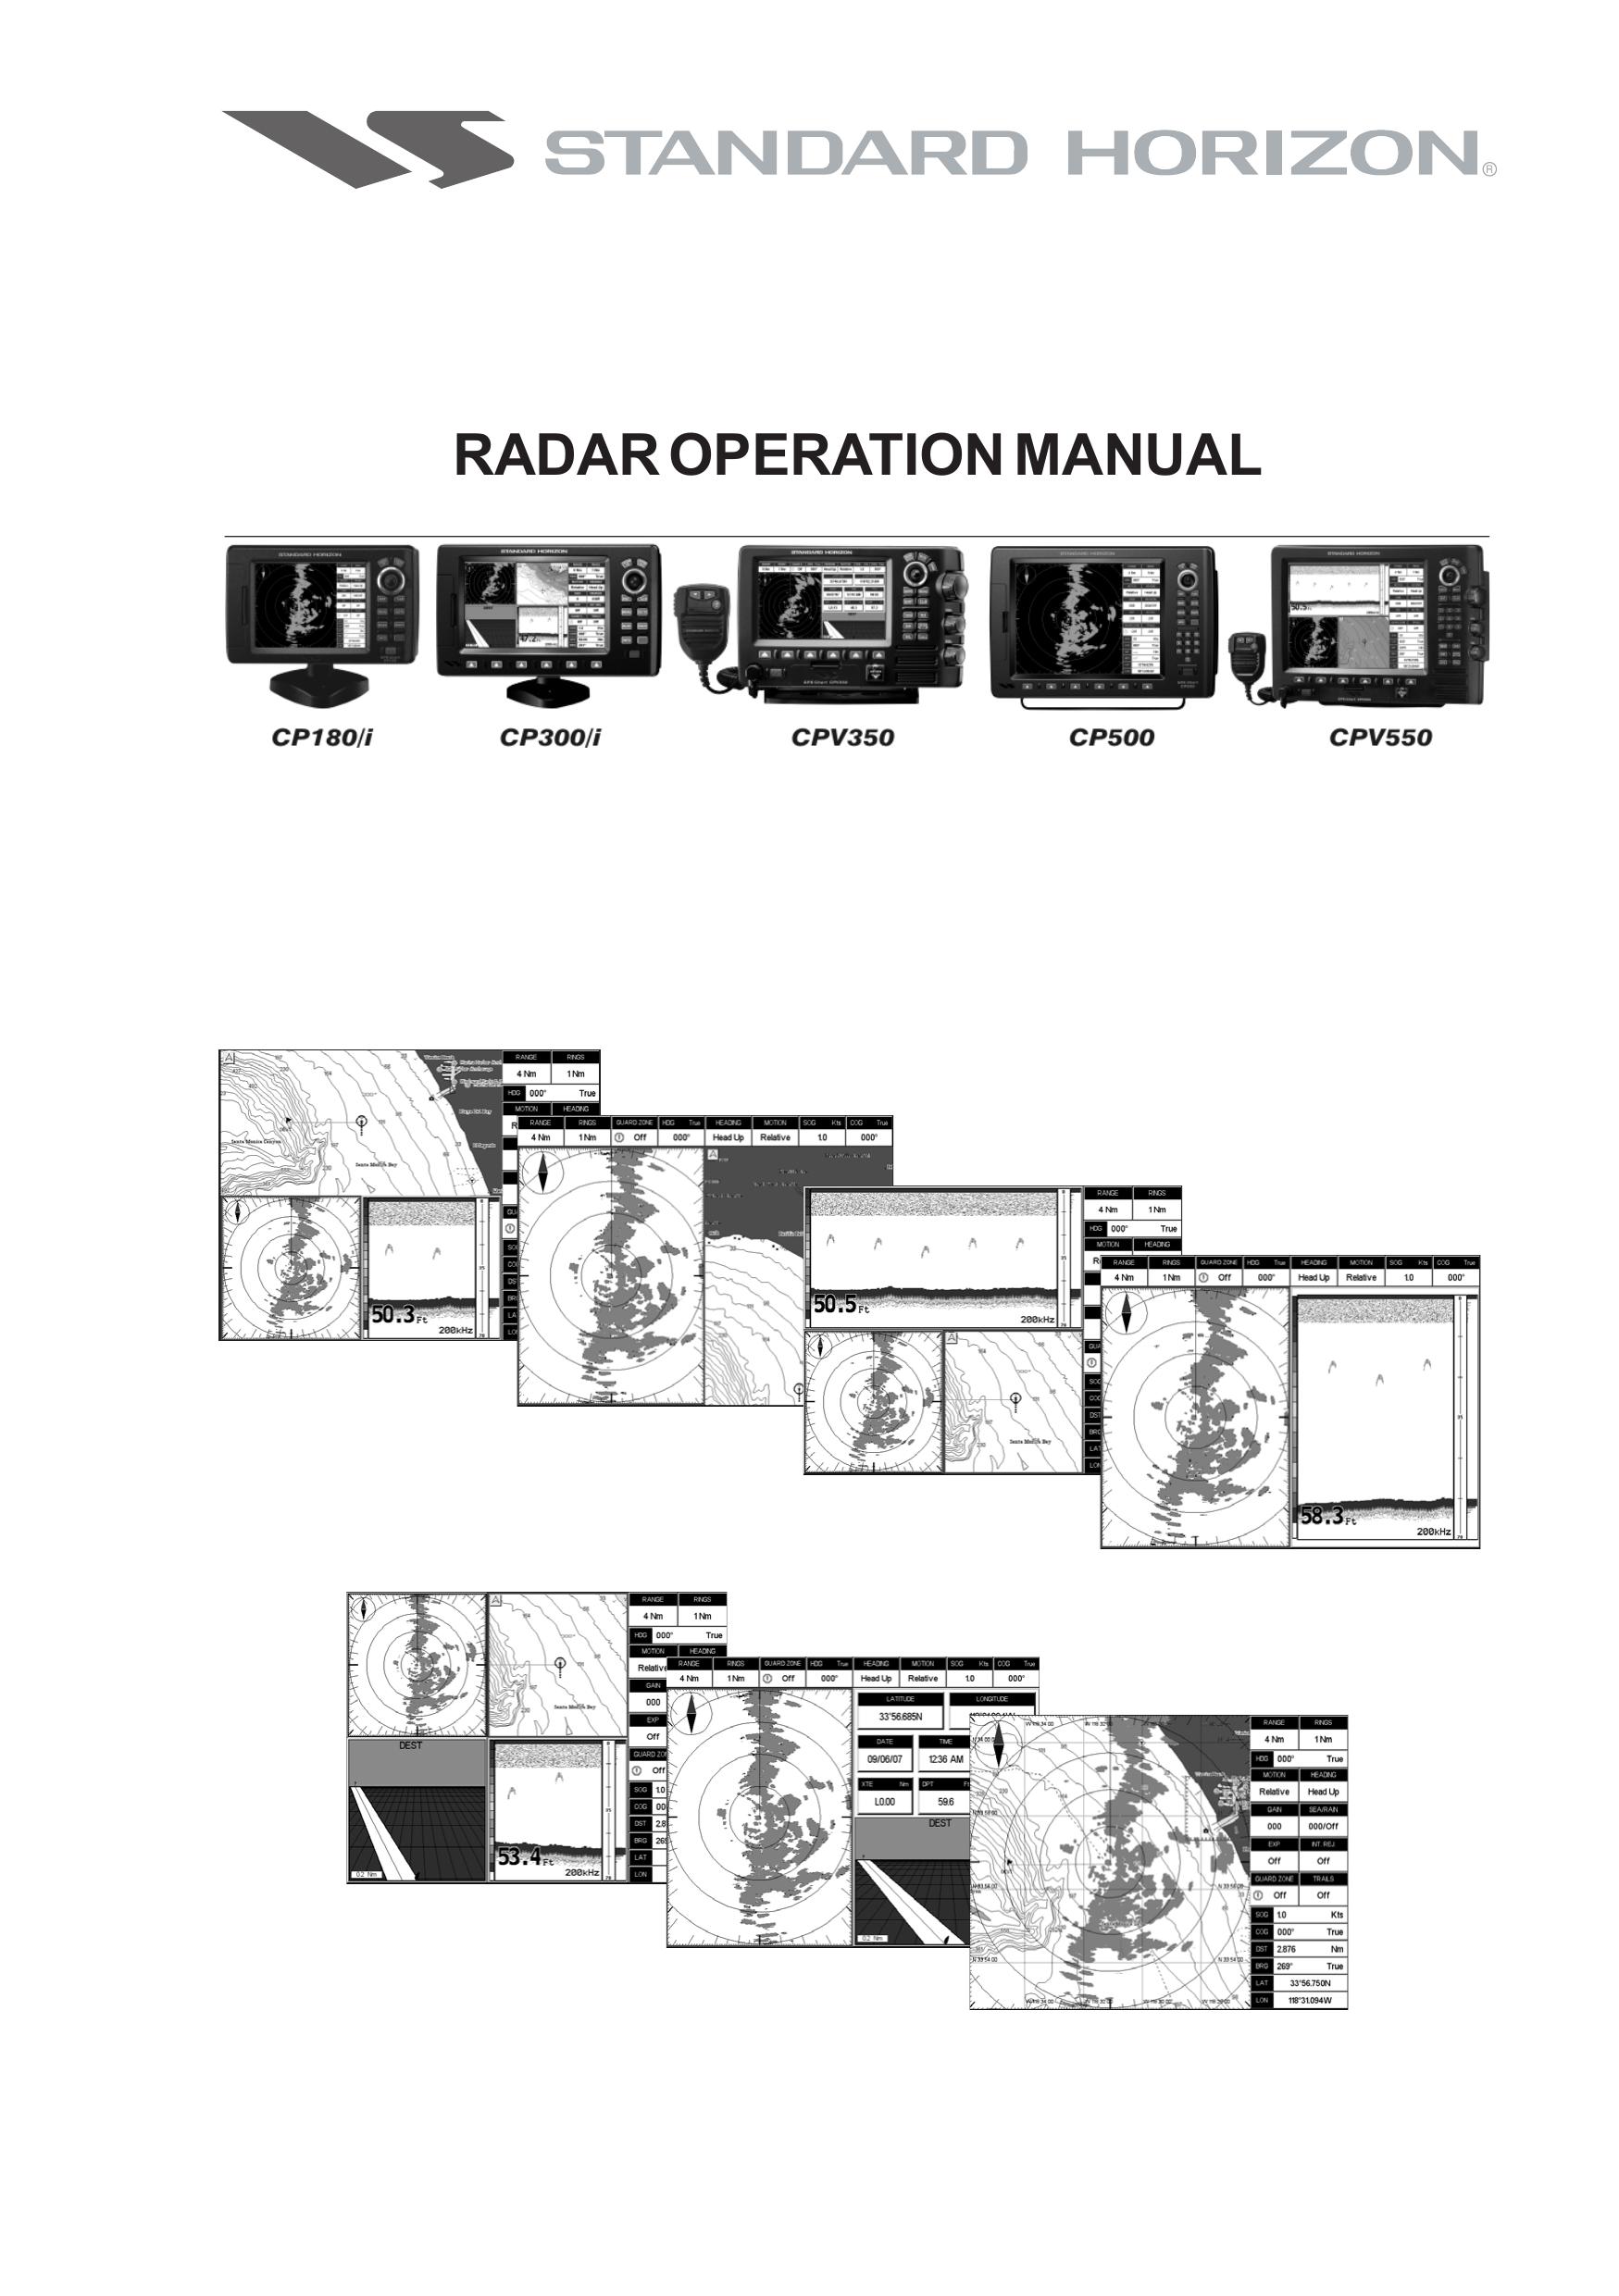 Standard Horizon CPV550 Marine RADAR User Manual